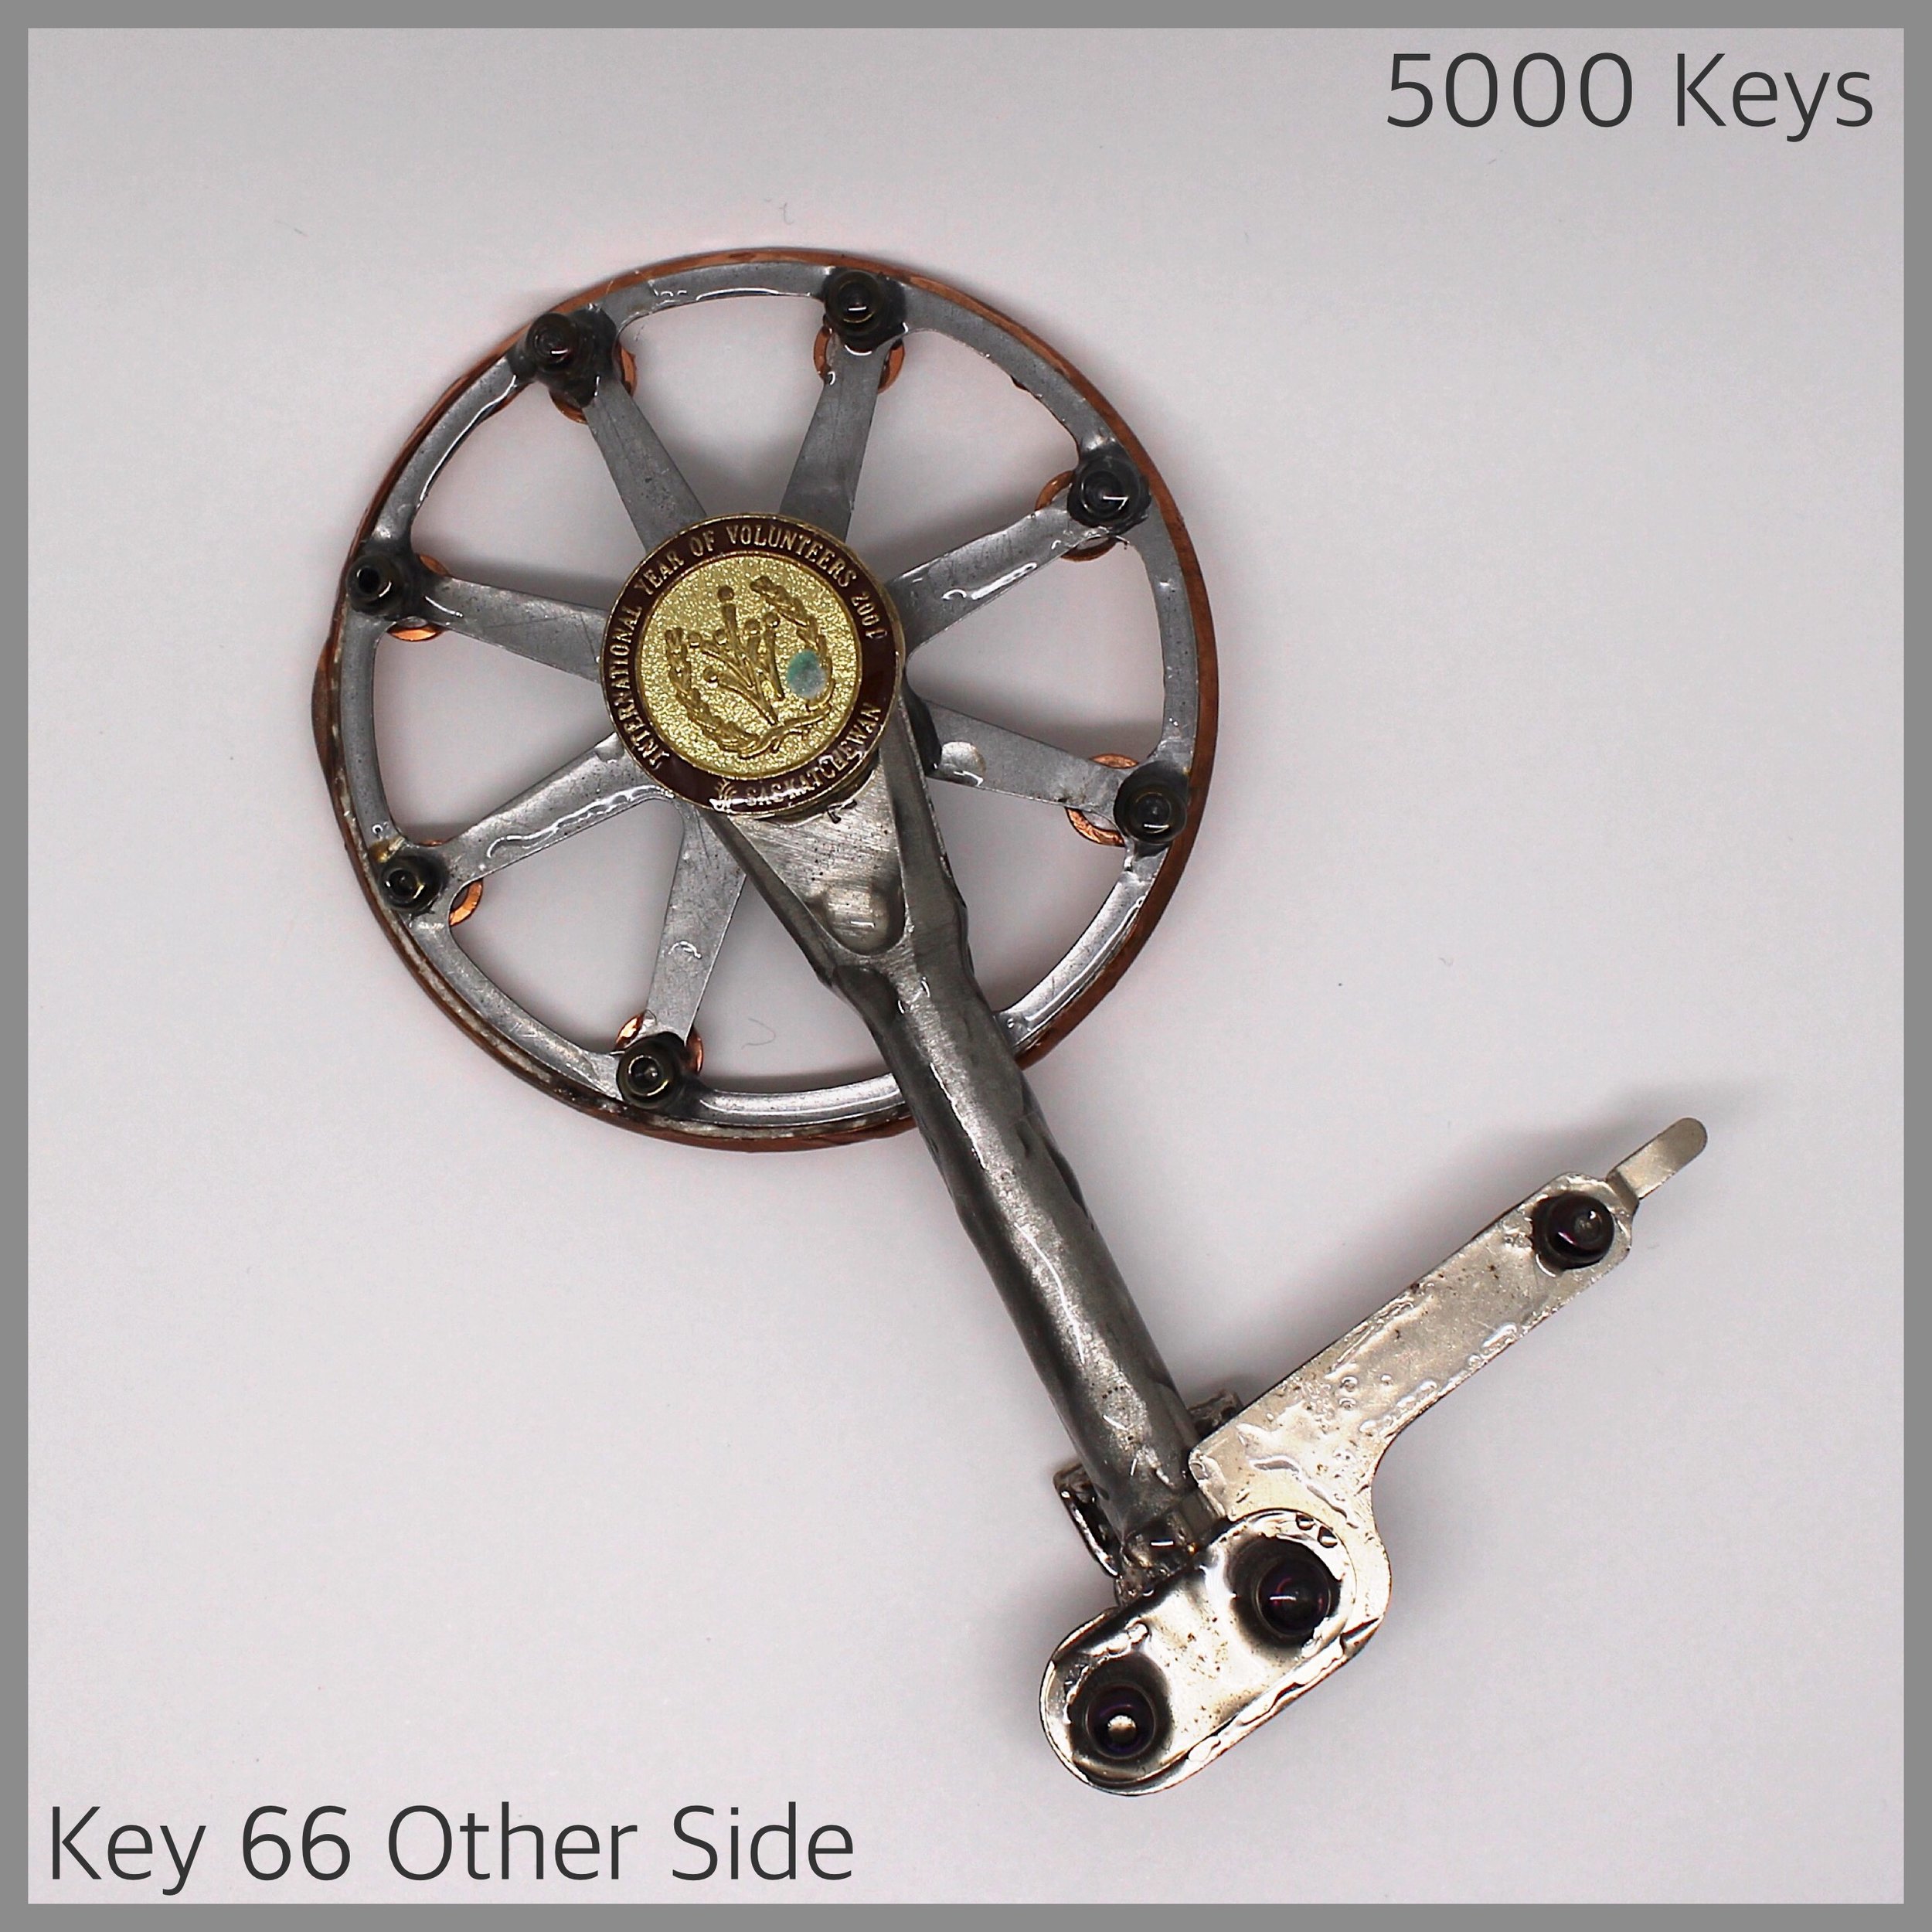 Key 66 other side - 1.JPG